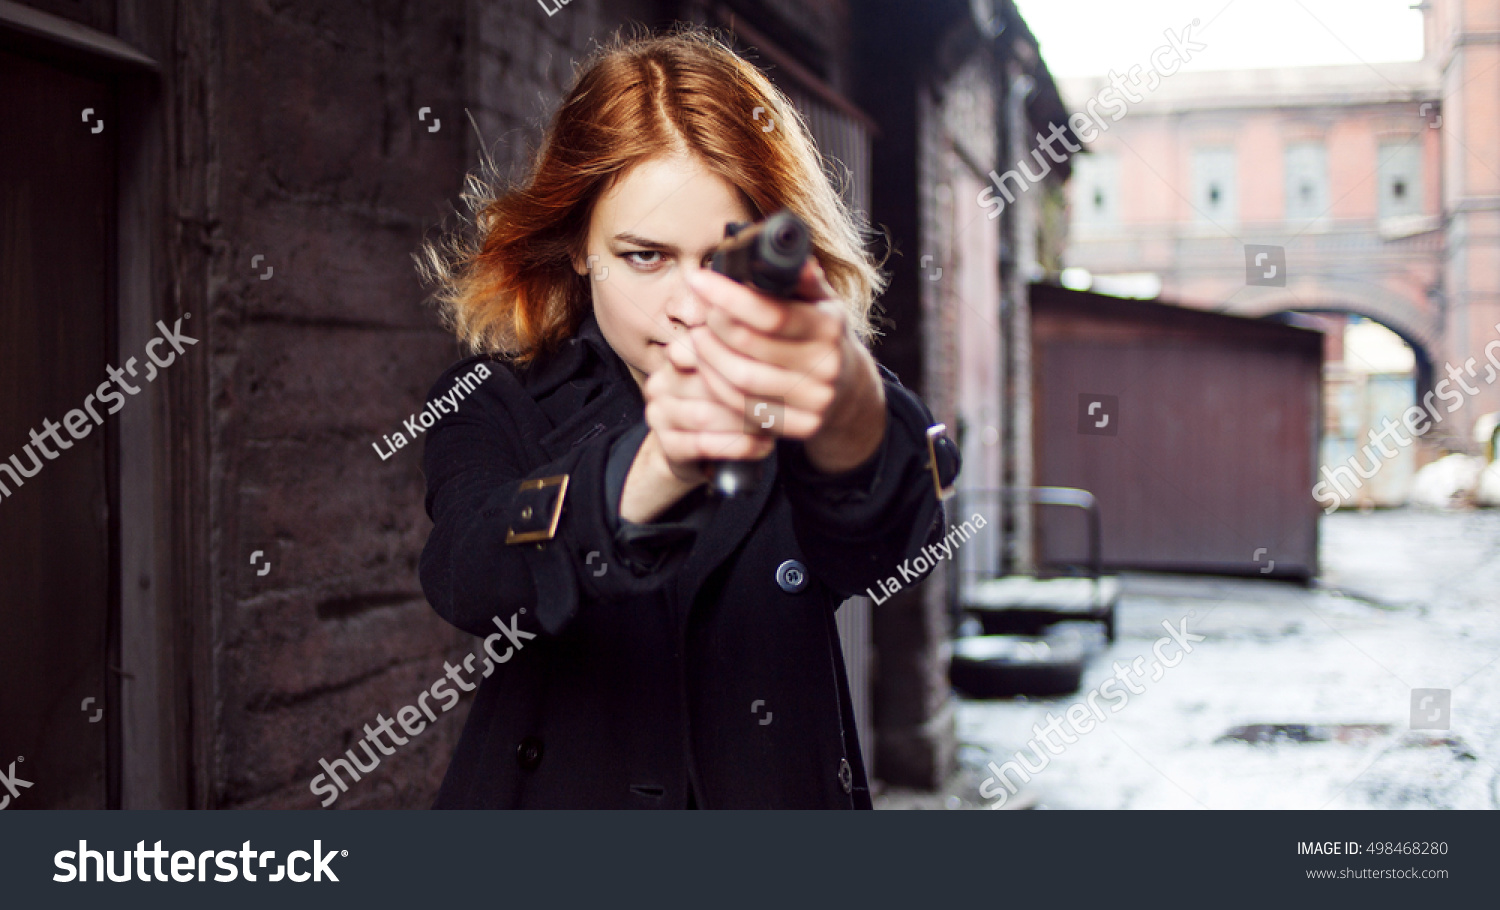 gun pointed at girl stock photo